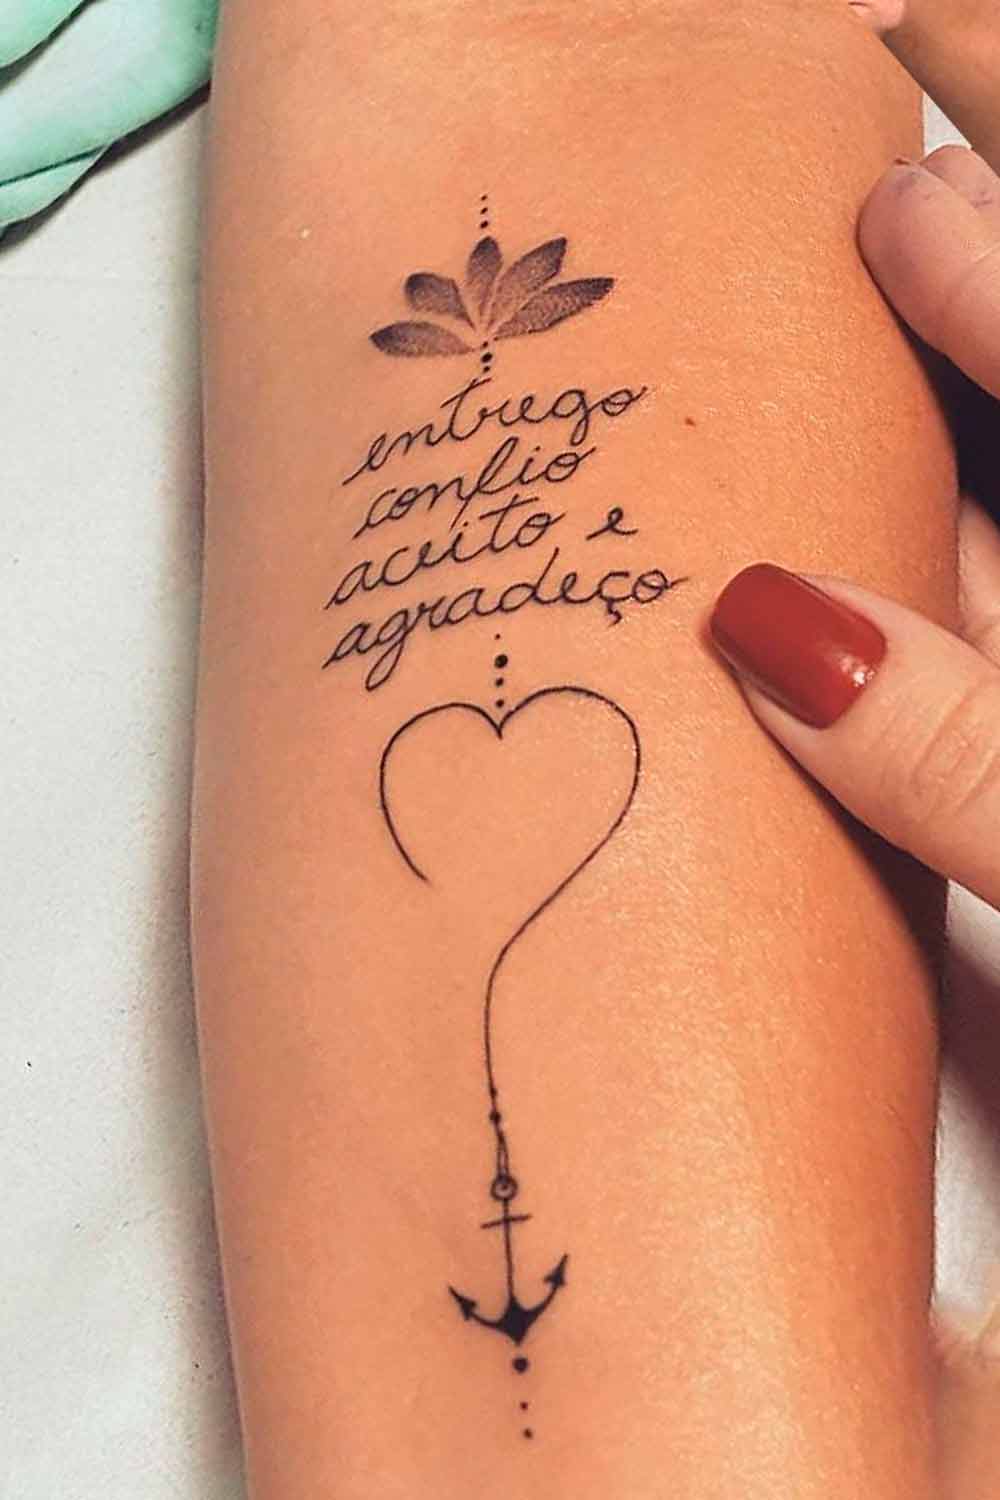 tatuagem-escrito-entrego-confio-aceito-e-agradeco 